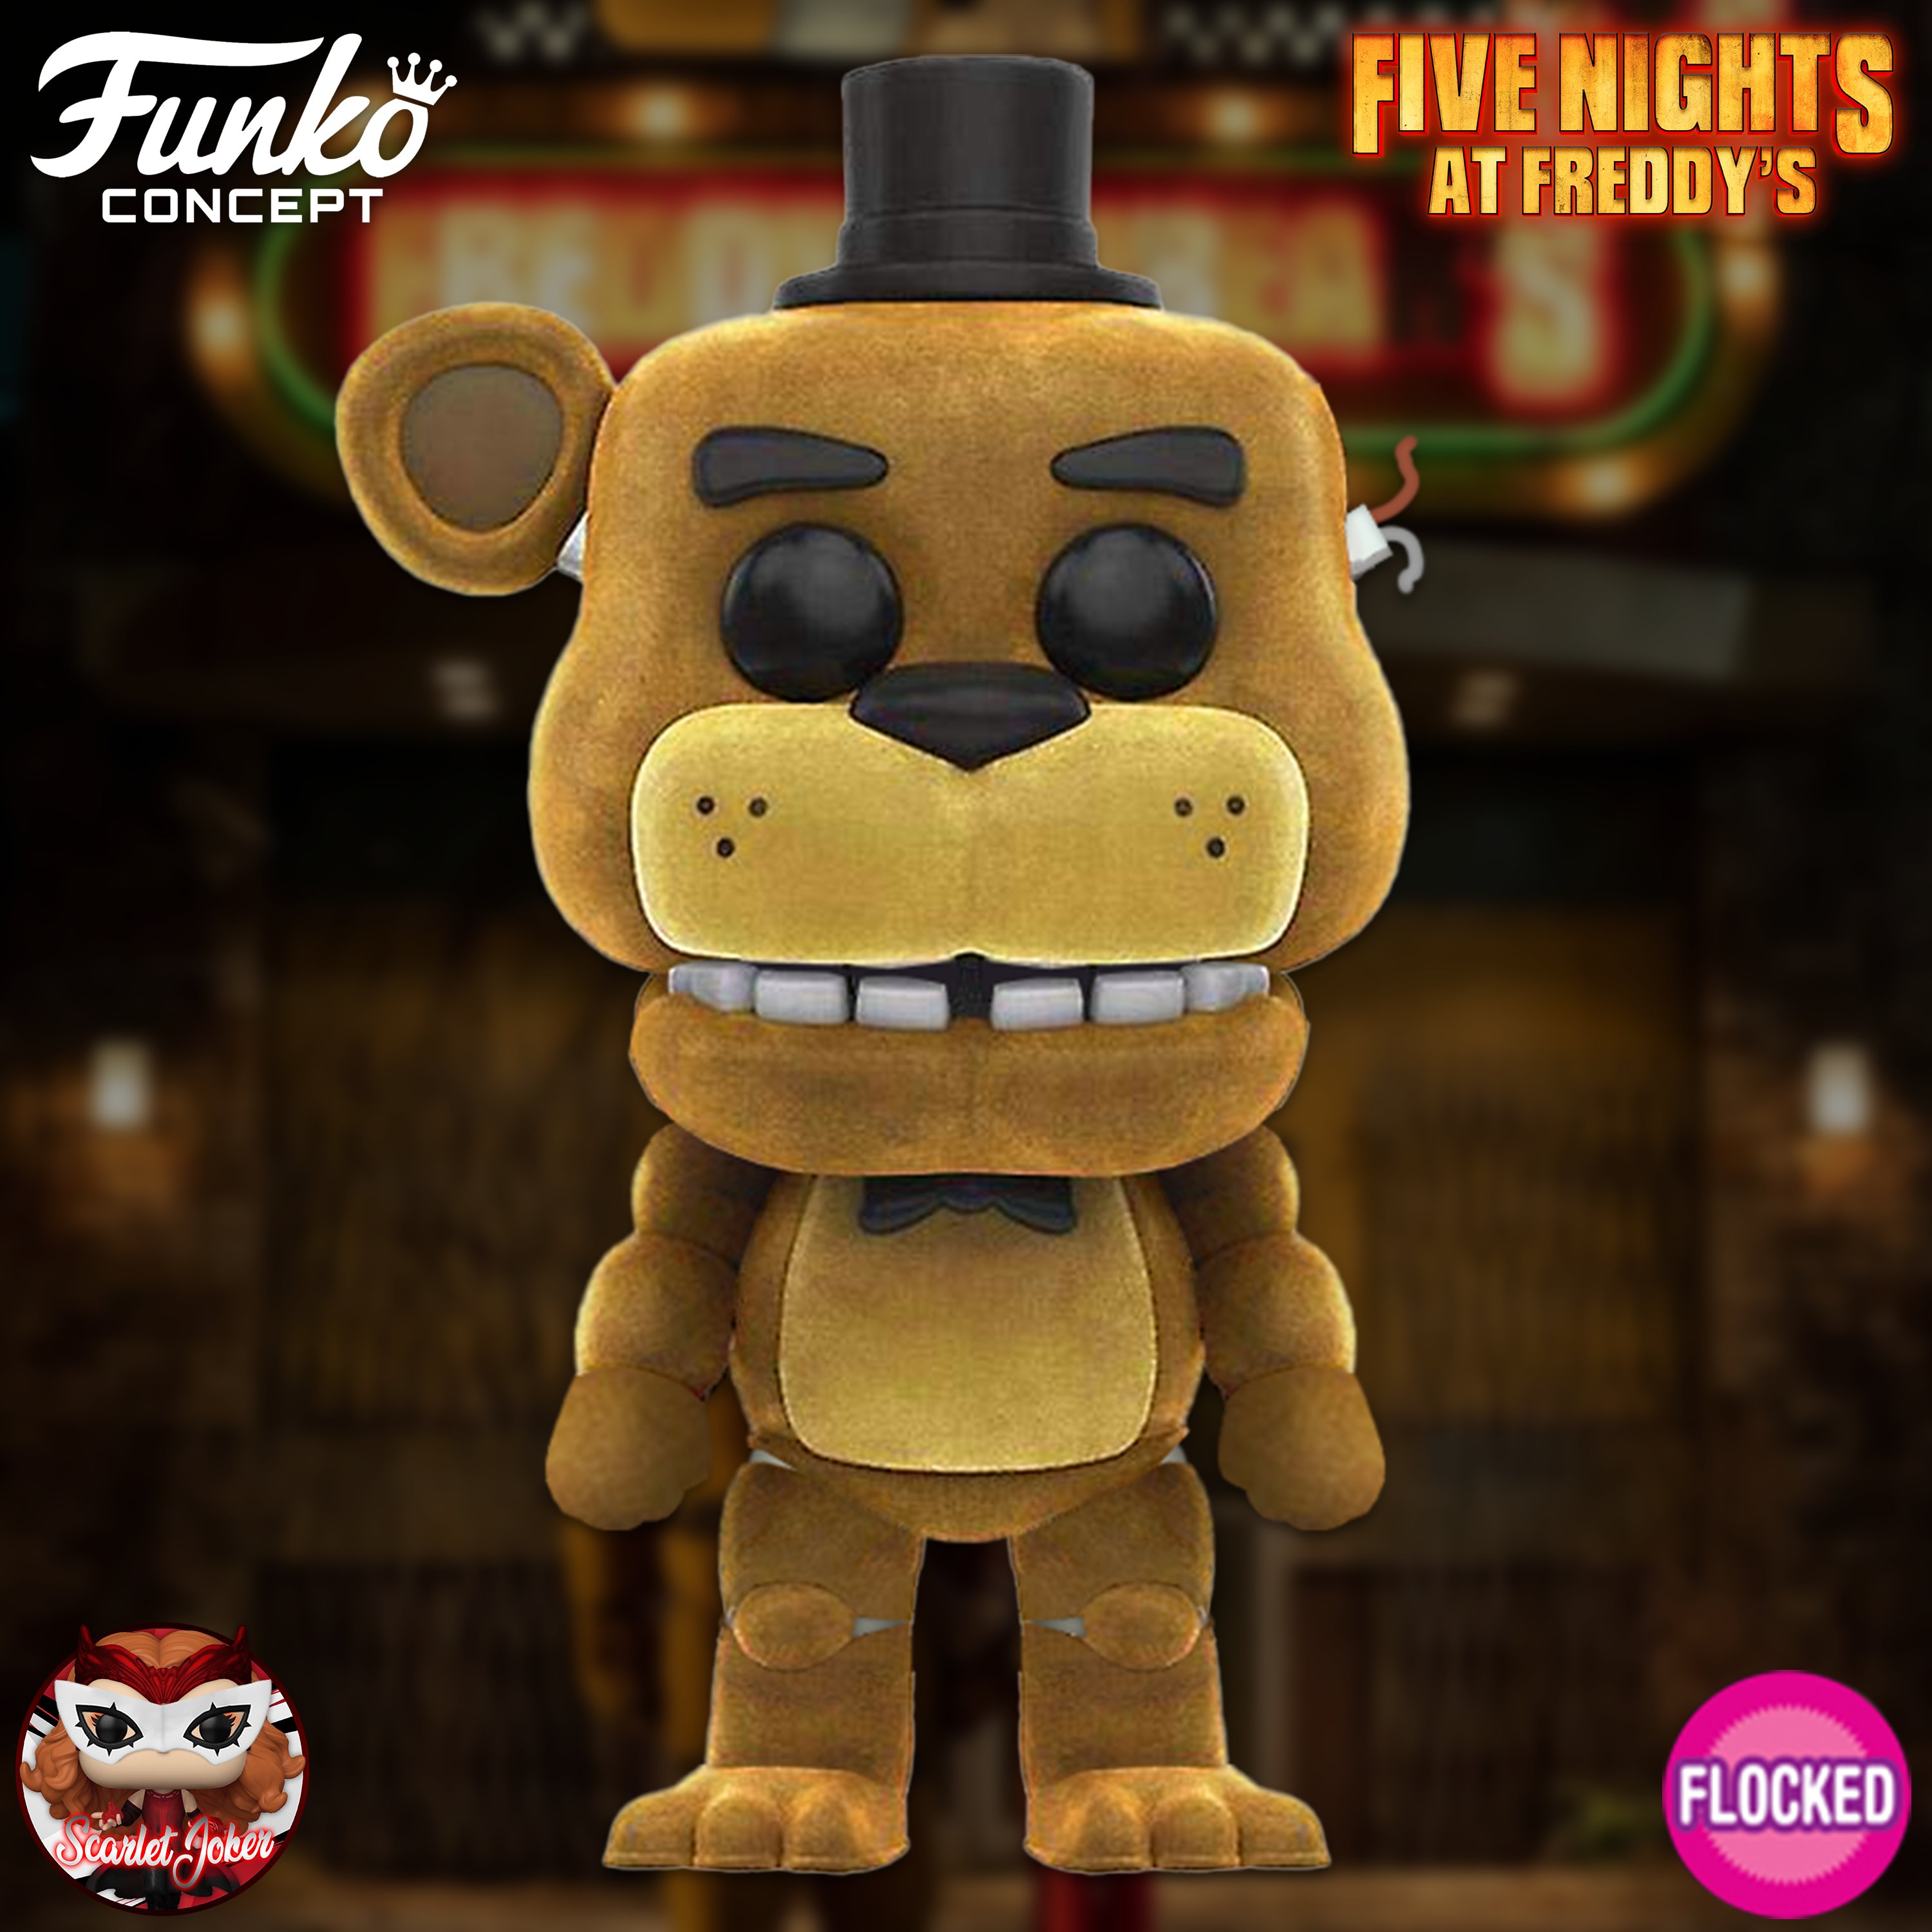 Lil smertestillende medicin Information Scarlet Joker  on X: "Funko Pop! Five Nights at Freddy's Flocked Golden  Freddy (Movie Version) Concept #Funko #FunkoPop #FiveNightsAtFreddys #FNAF  #FNAFMovie https://t.co/RZQTKQ4HcW" / X